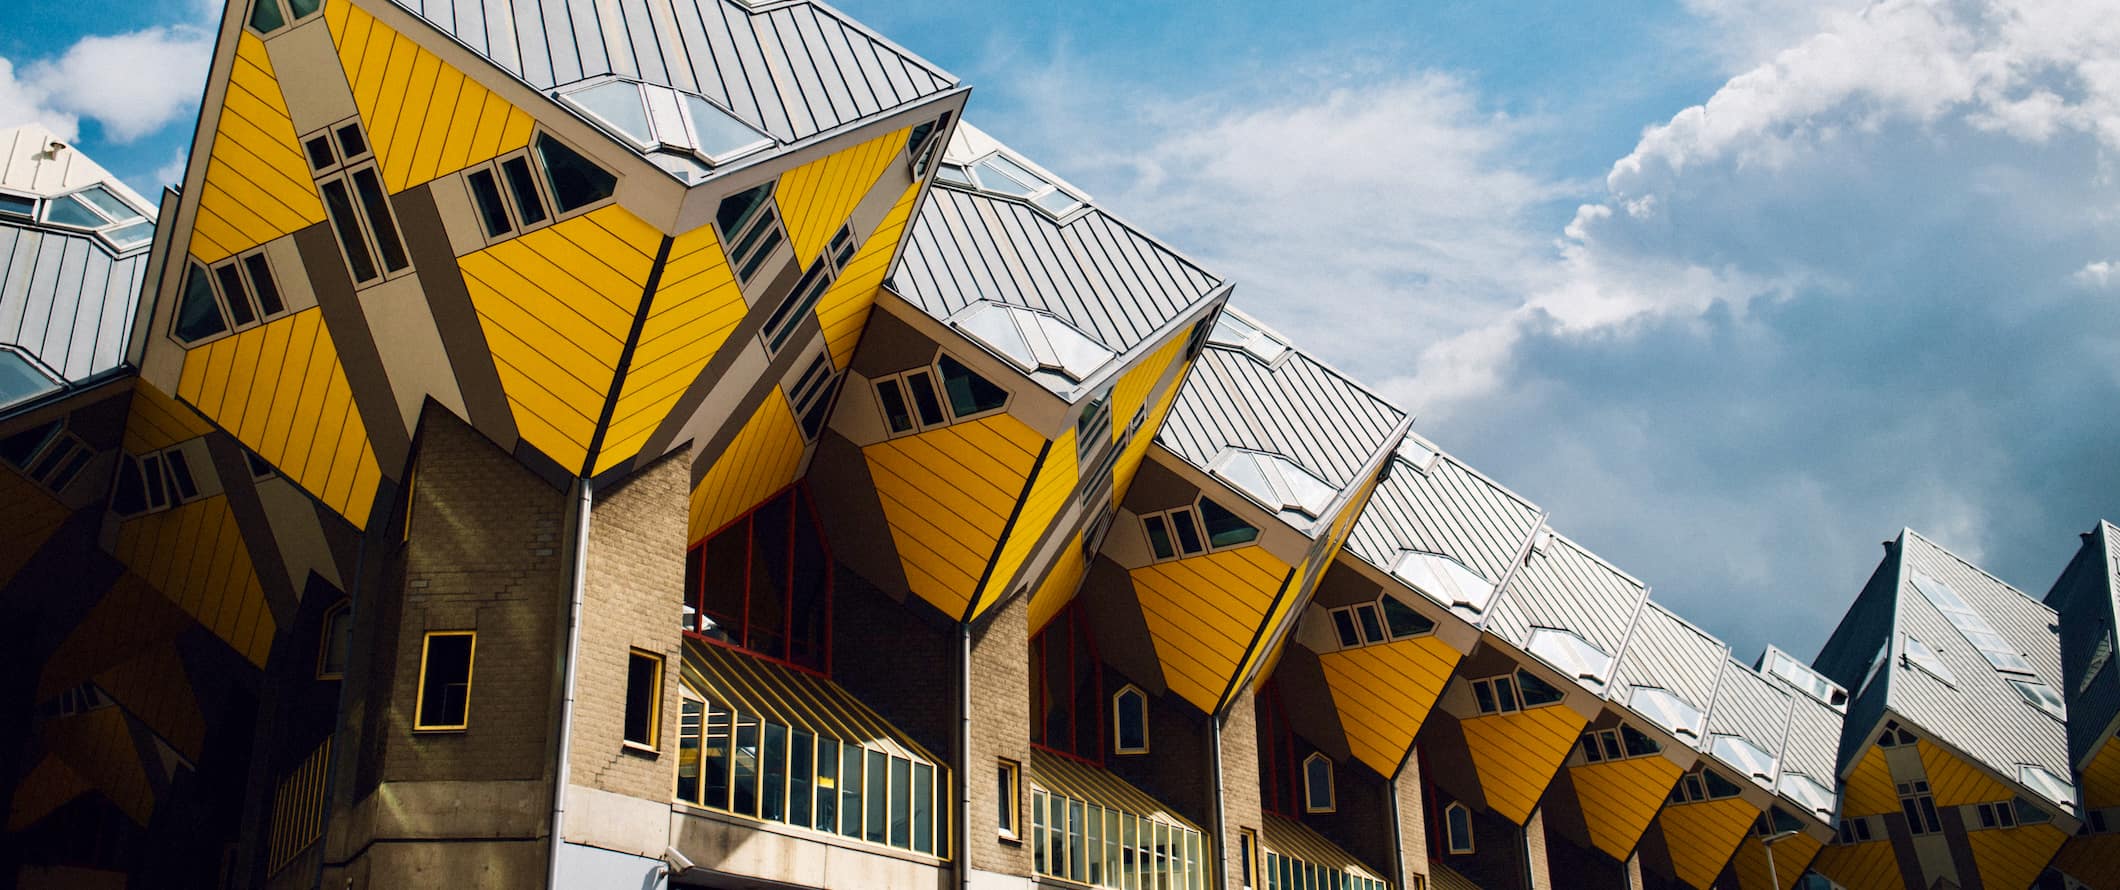 The iconic Cube Houses near the Erasmus Bridge in sunny Rotterdam, Netherlands